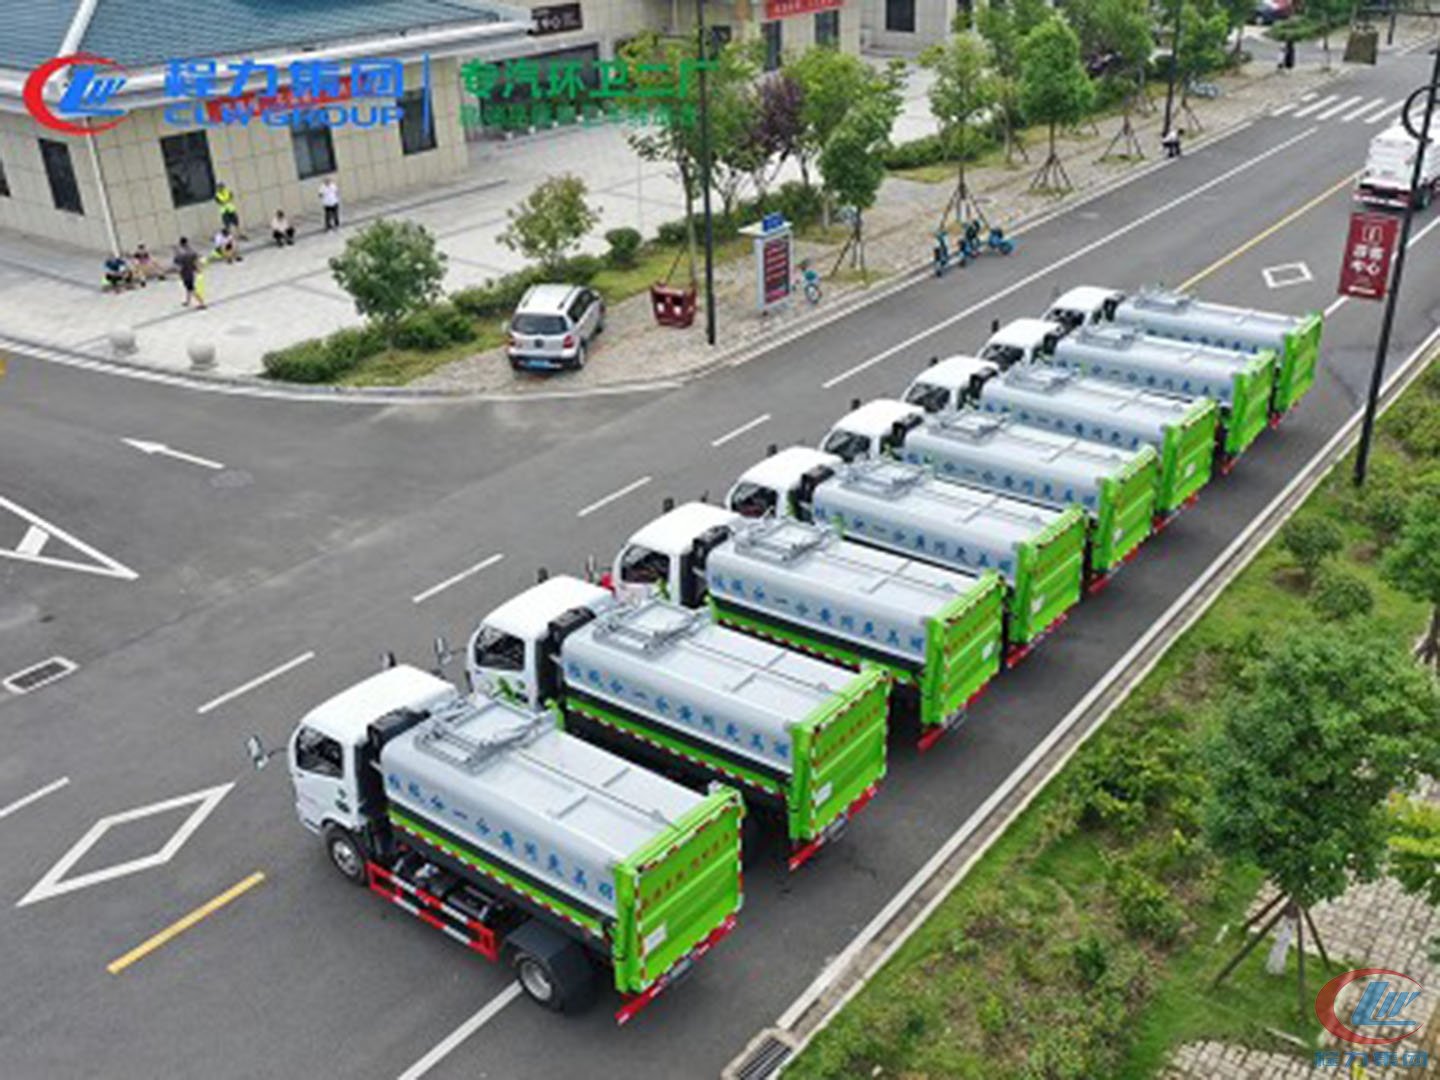 j9.com(中国区)官方网站集团国六东风福瑞卡5方餐厨垃圾车批量交车